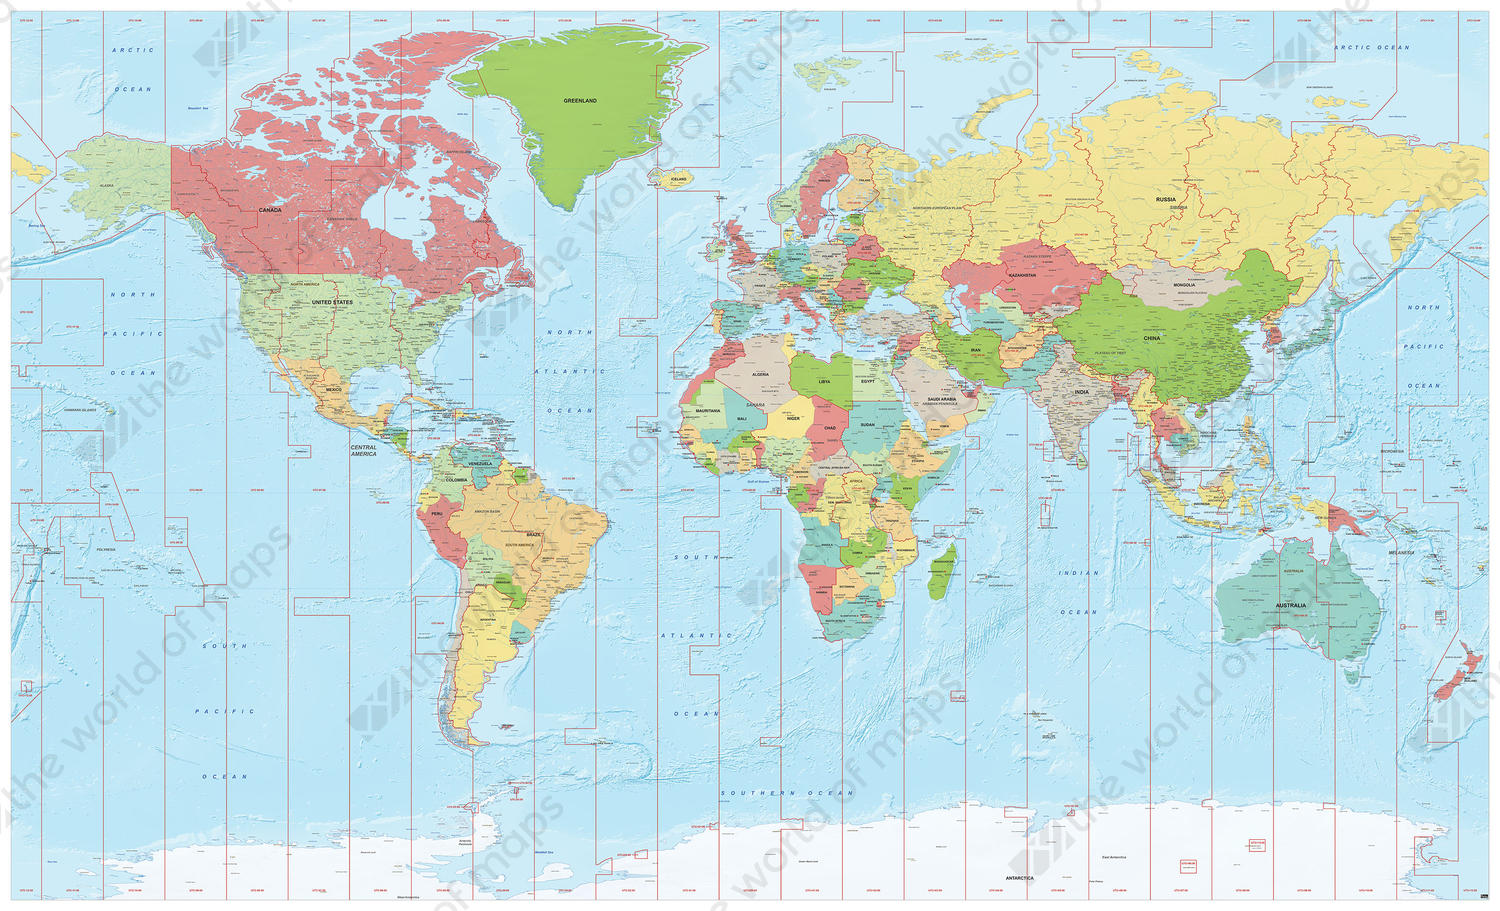 Digital time zone world map